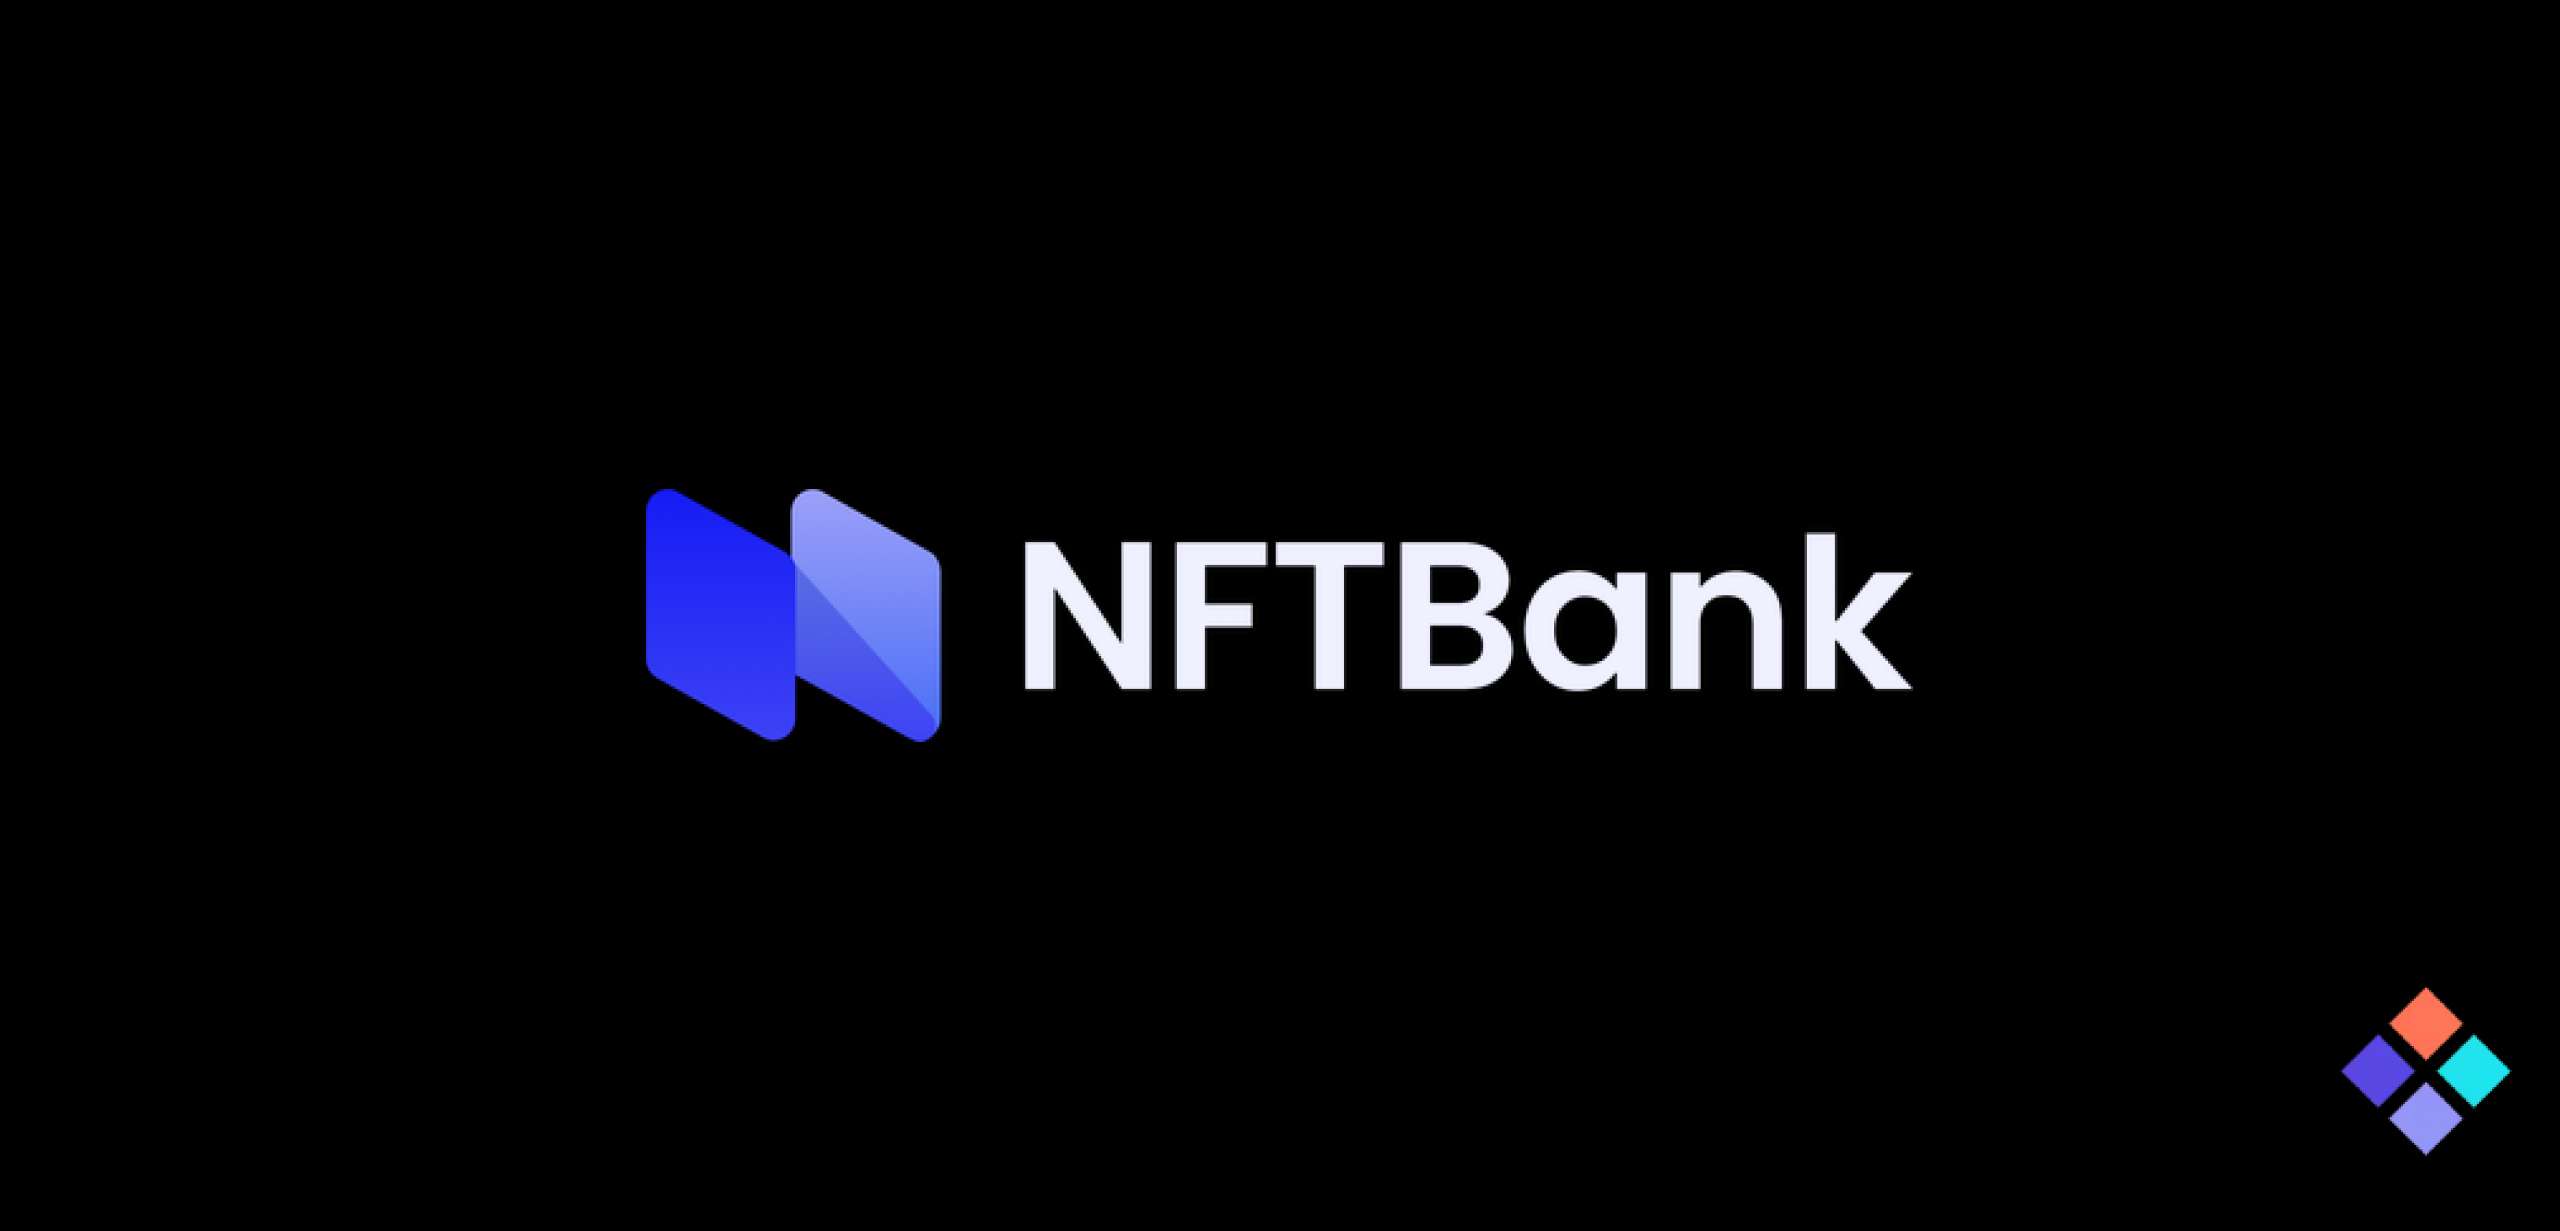 NFT Management Platform Launches New Features with NFTBank V2